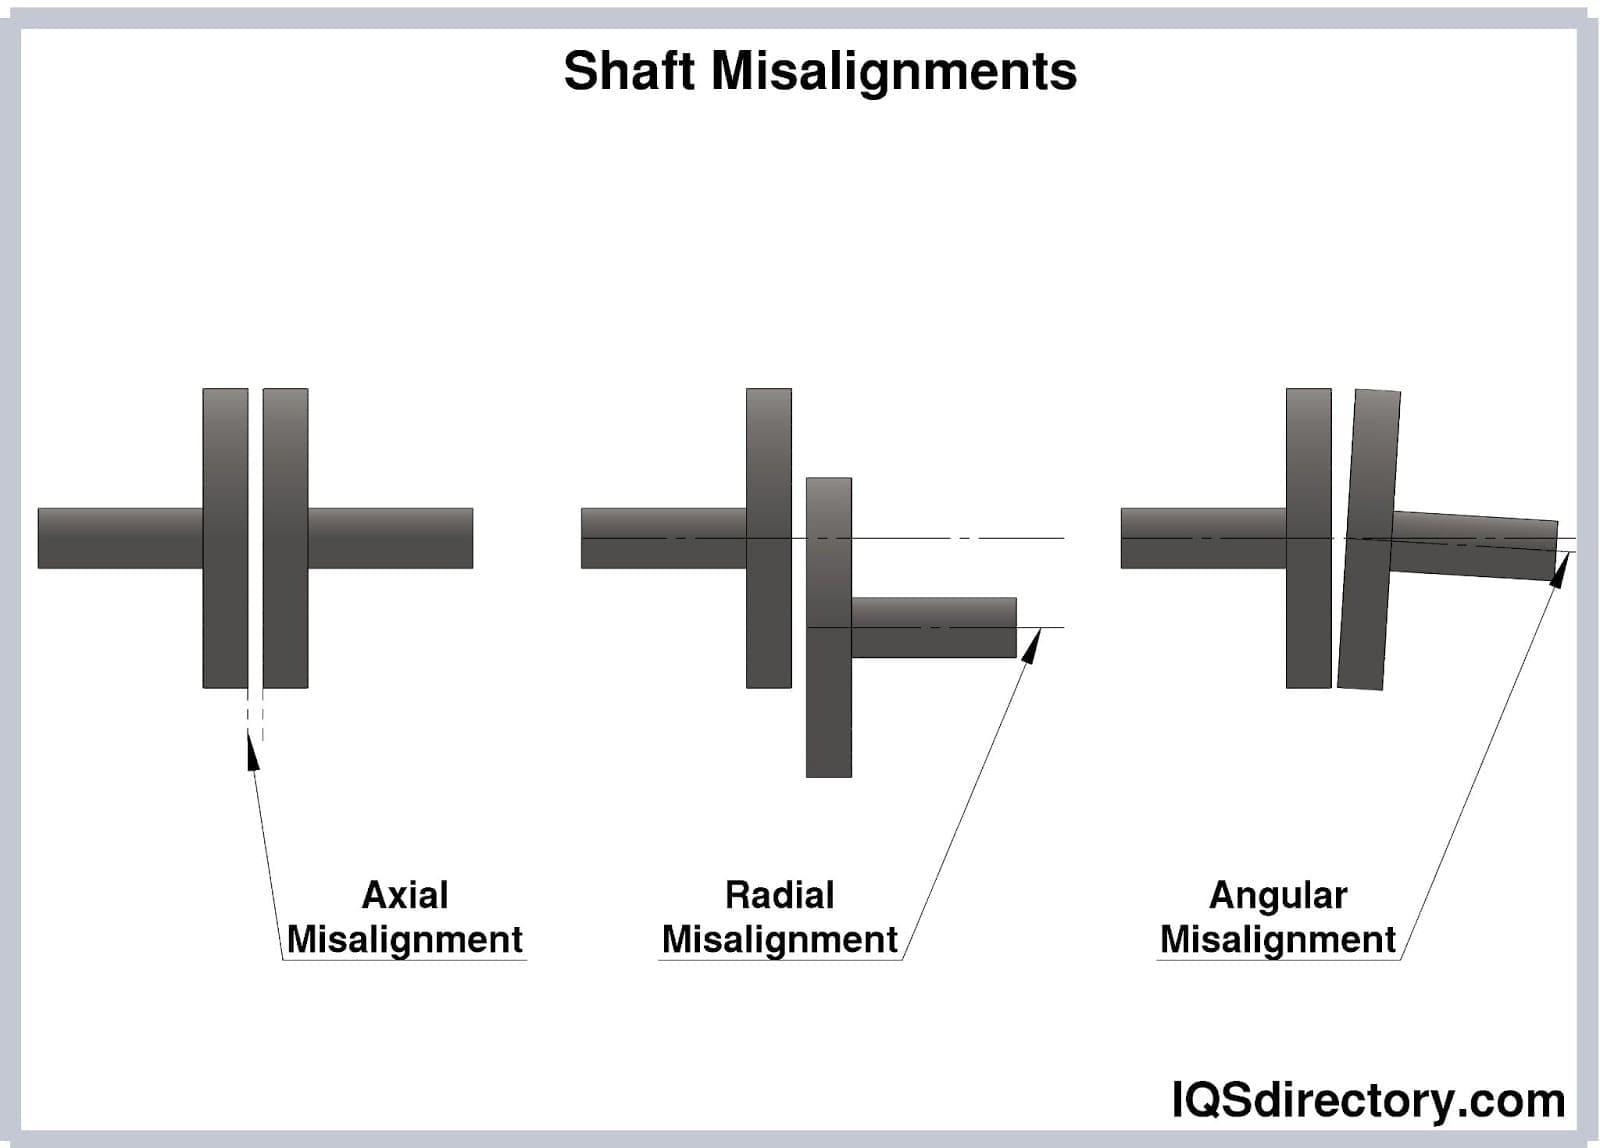 Shaft Misalignments